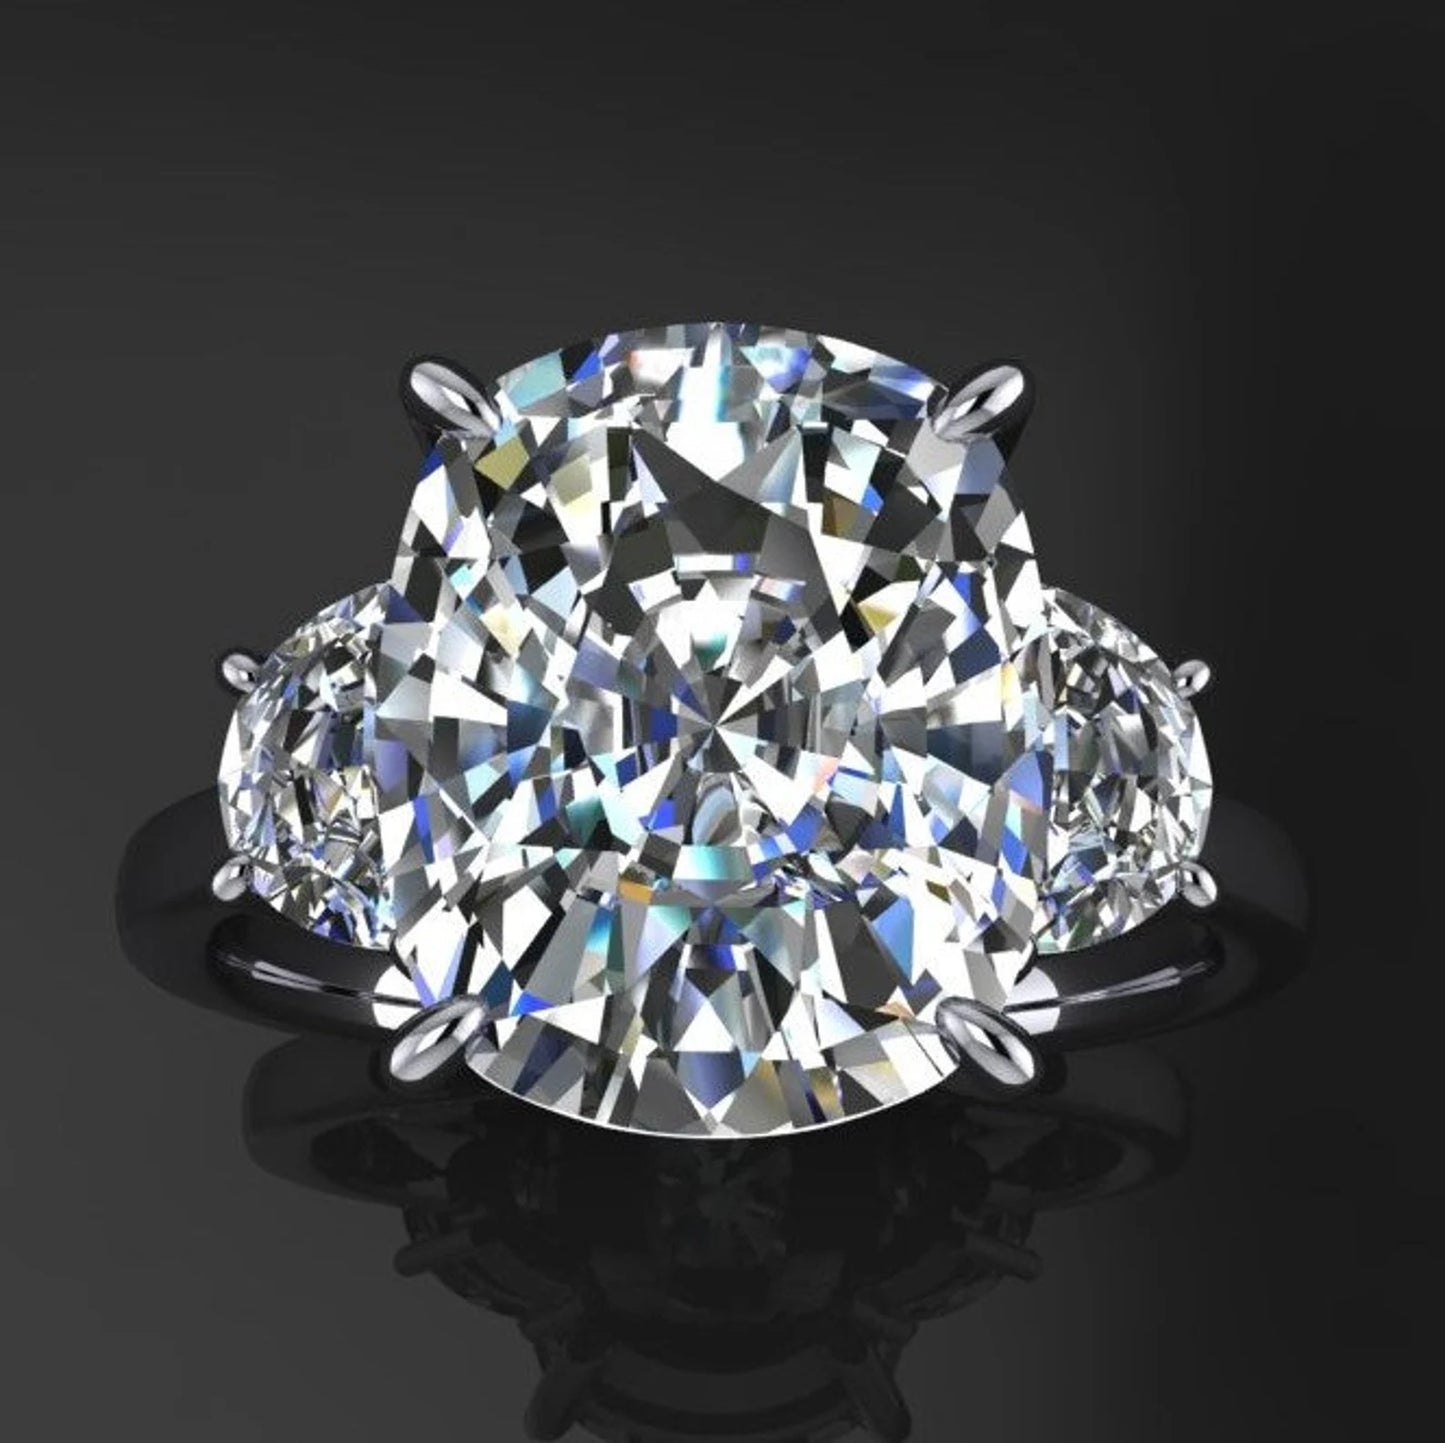 demi ring - three stone elongated cushion cut ZAYA moissanite engagement ring, half moon side stones - J Hollywood Designs